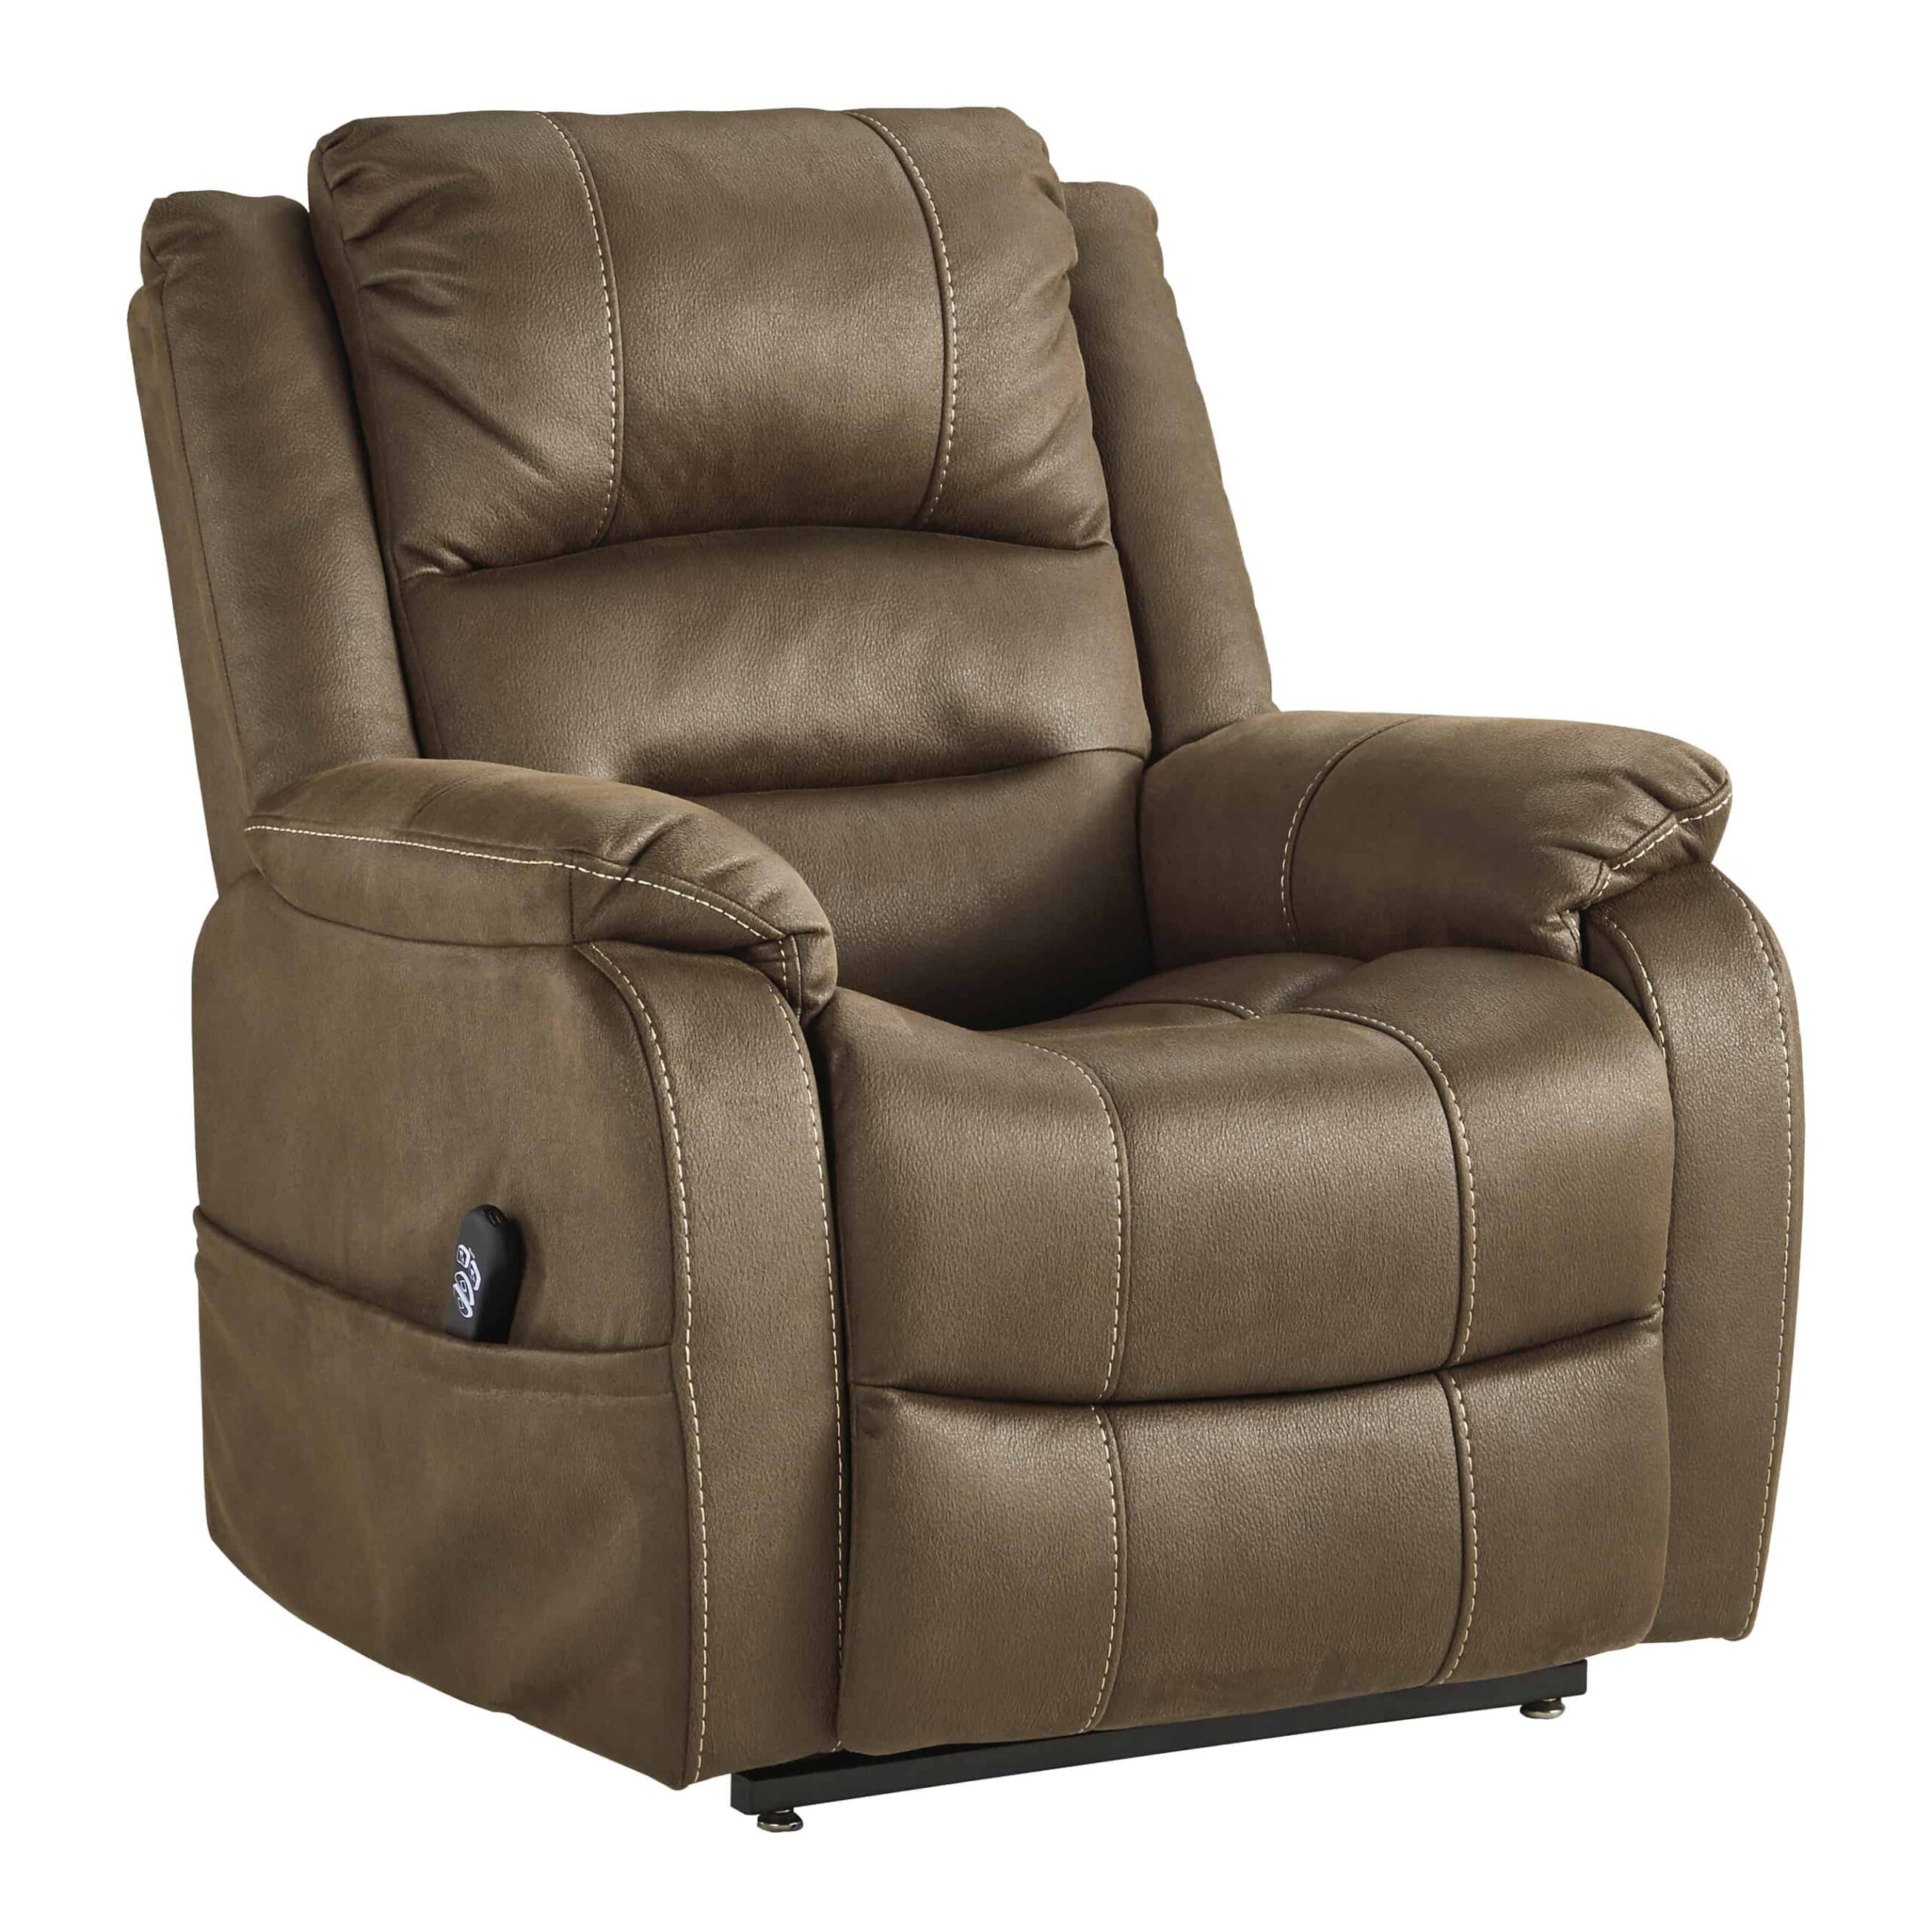 7520512 Whitehill Chocolate Lift Chair